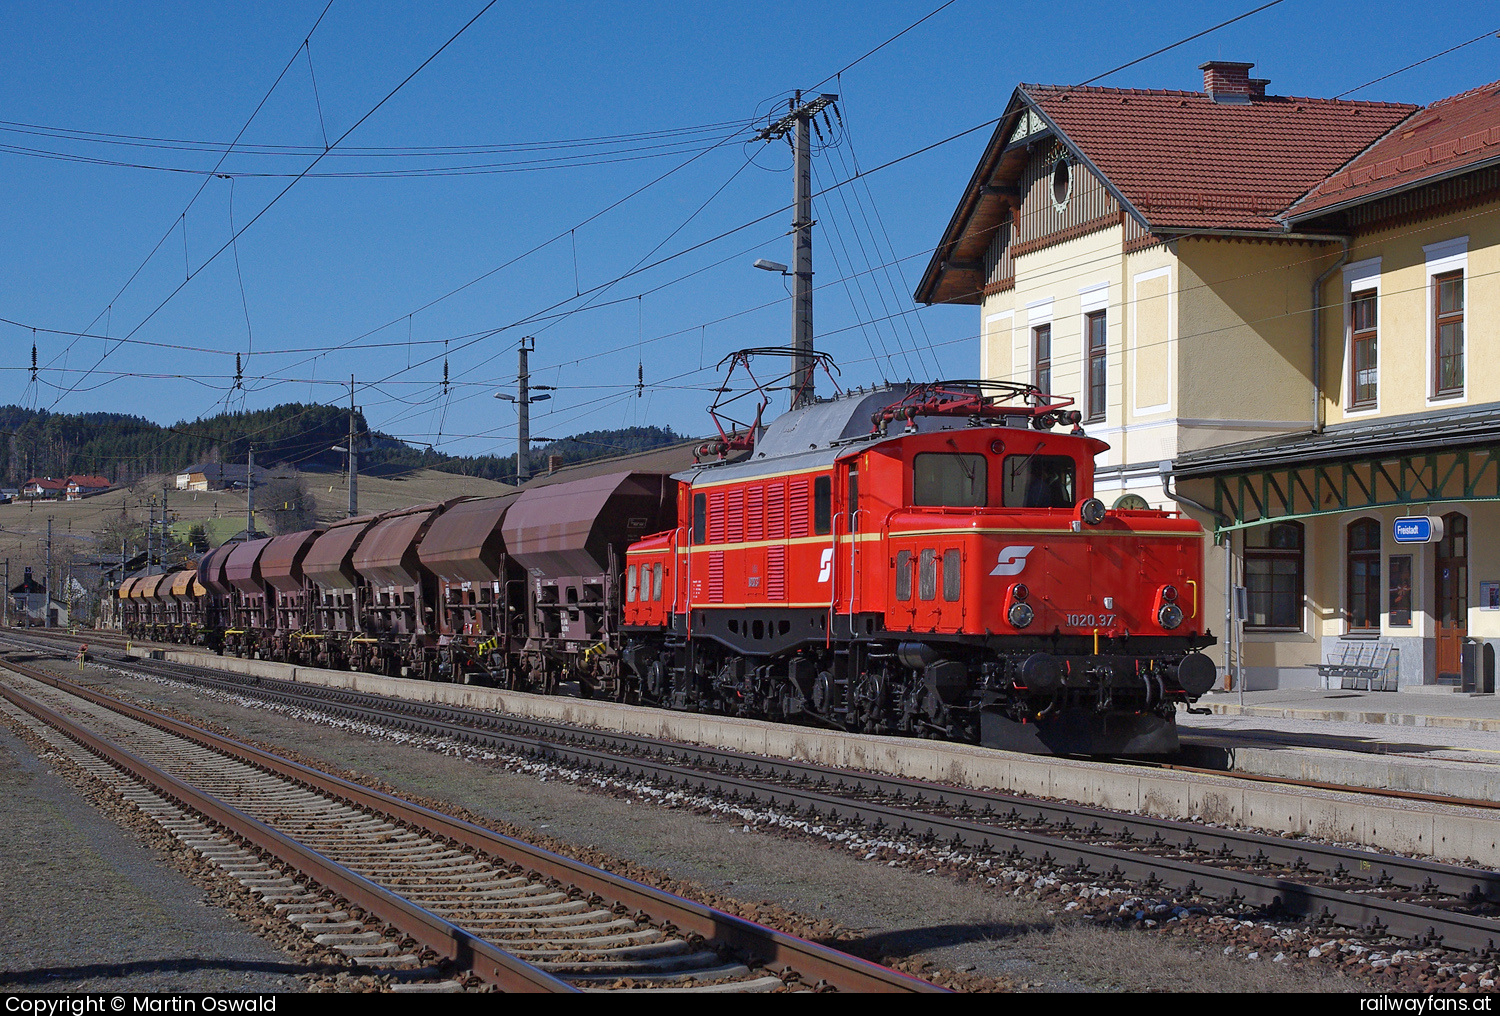 ÖGEG 1020 37 in Freistadt Summerauerbahn | Linz Hbf - Summerau Railwayfans